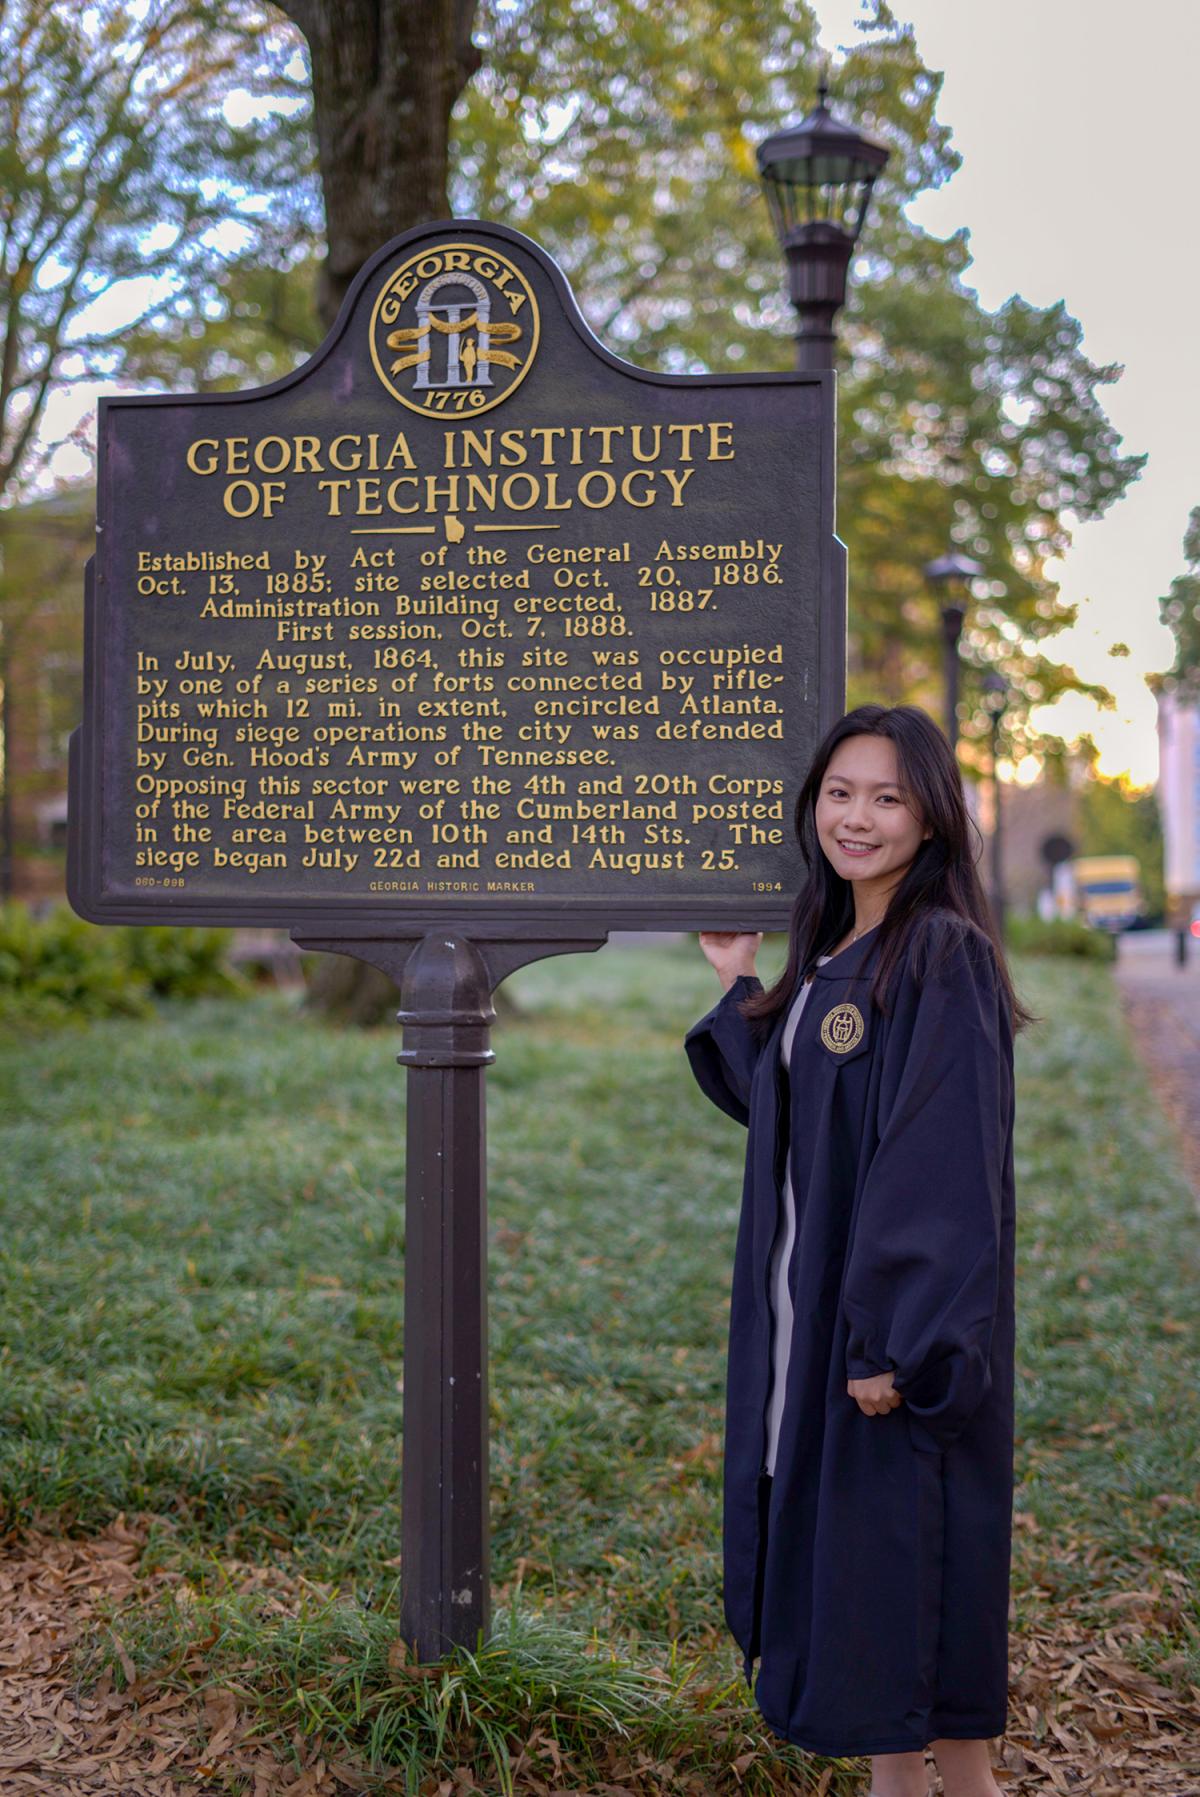 Victoria Lynn in commencement regalia next to the Georgia Tech marker